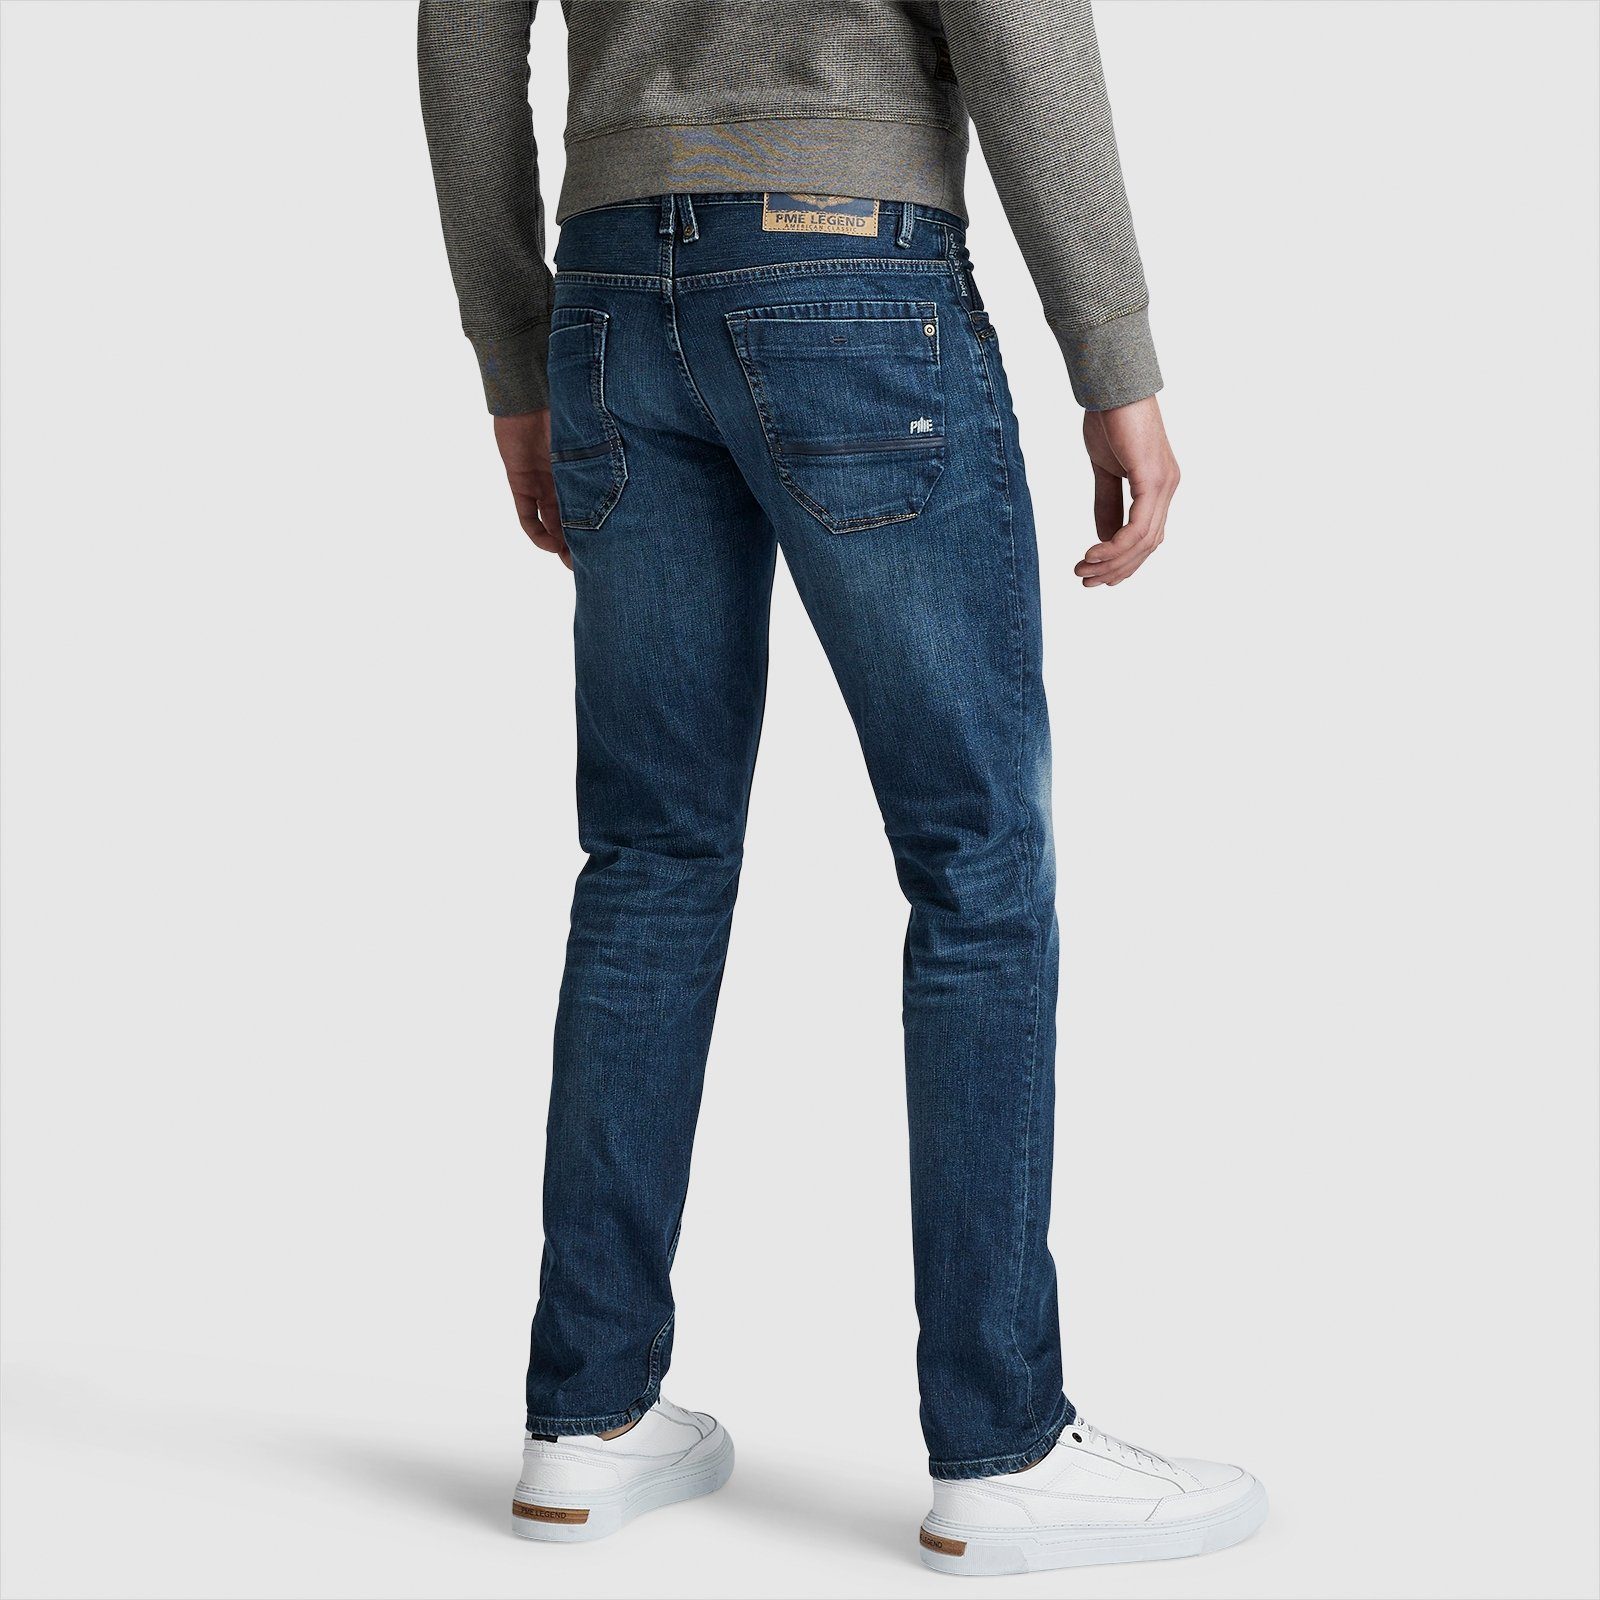 PME 5-Pocket-Jeans LEGEND denim PME dark PTR650-DIW indigo SKYMASTER LEGEND